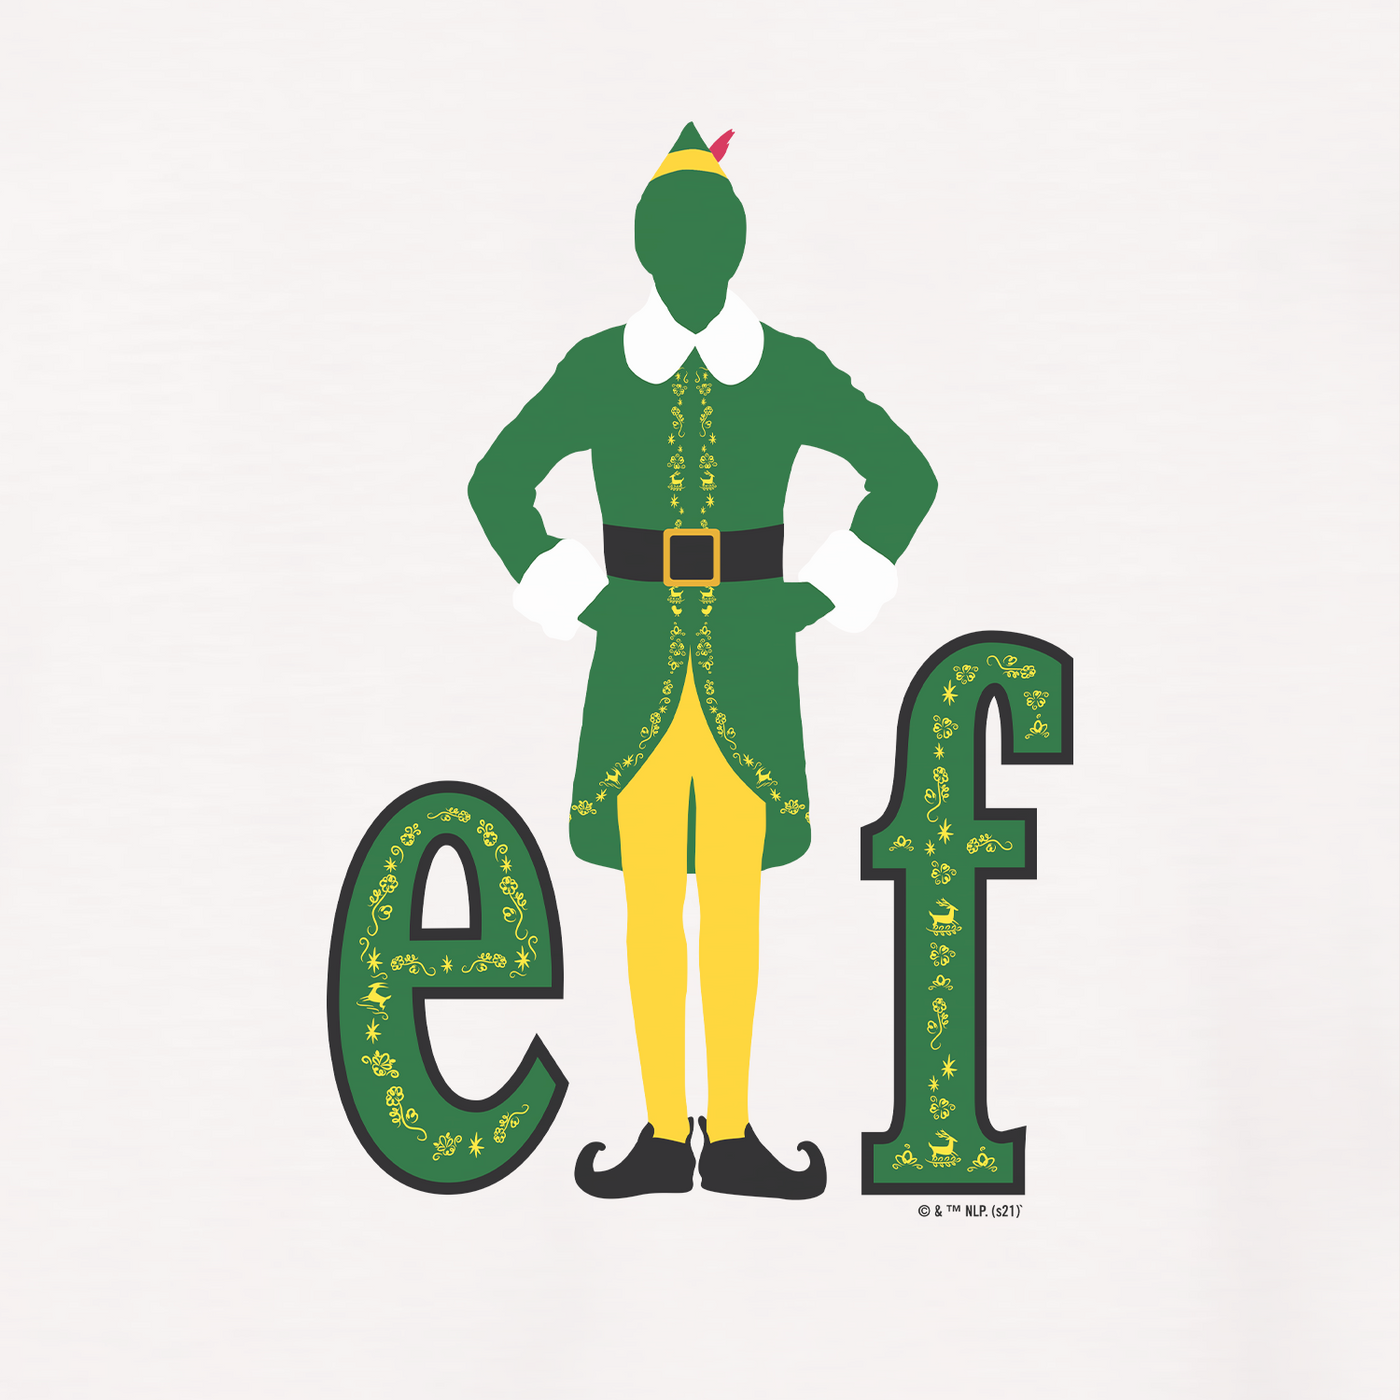 Elf Logo Adult Short Sleeve T-Shirt